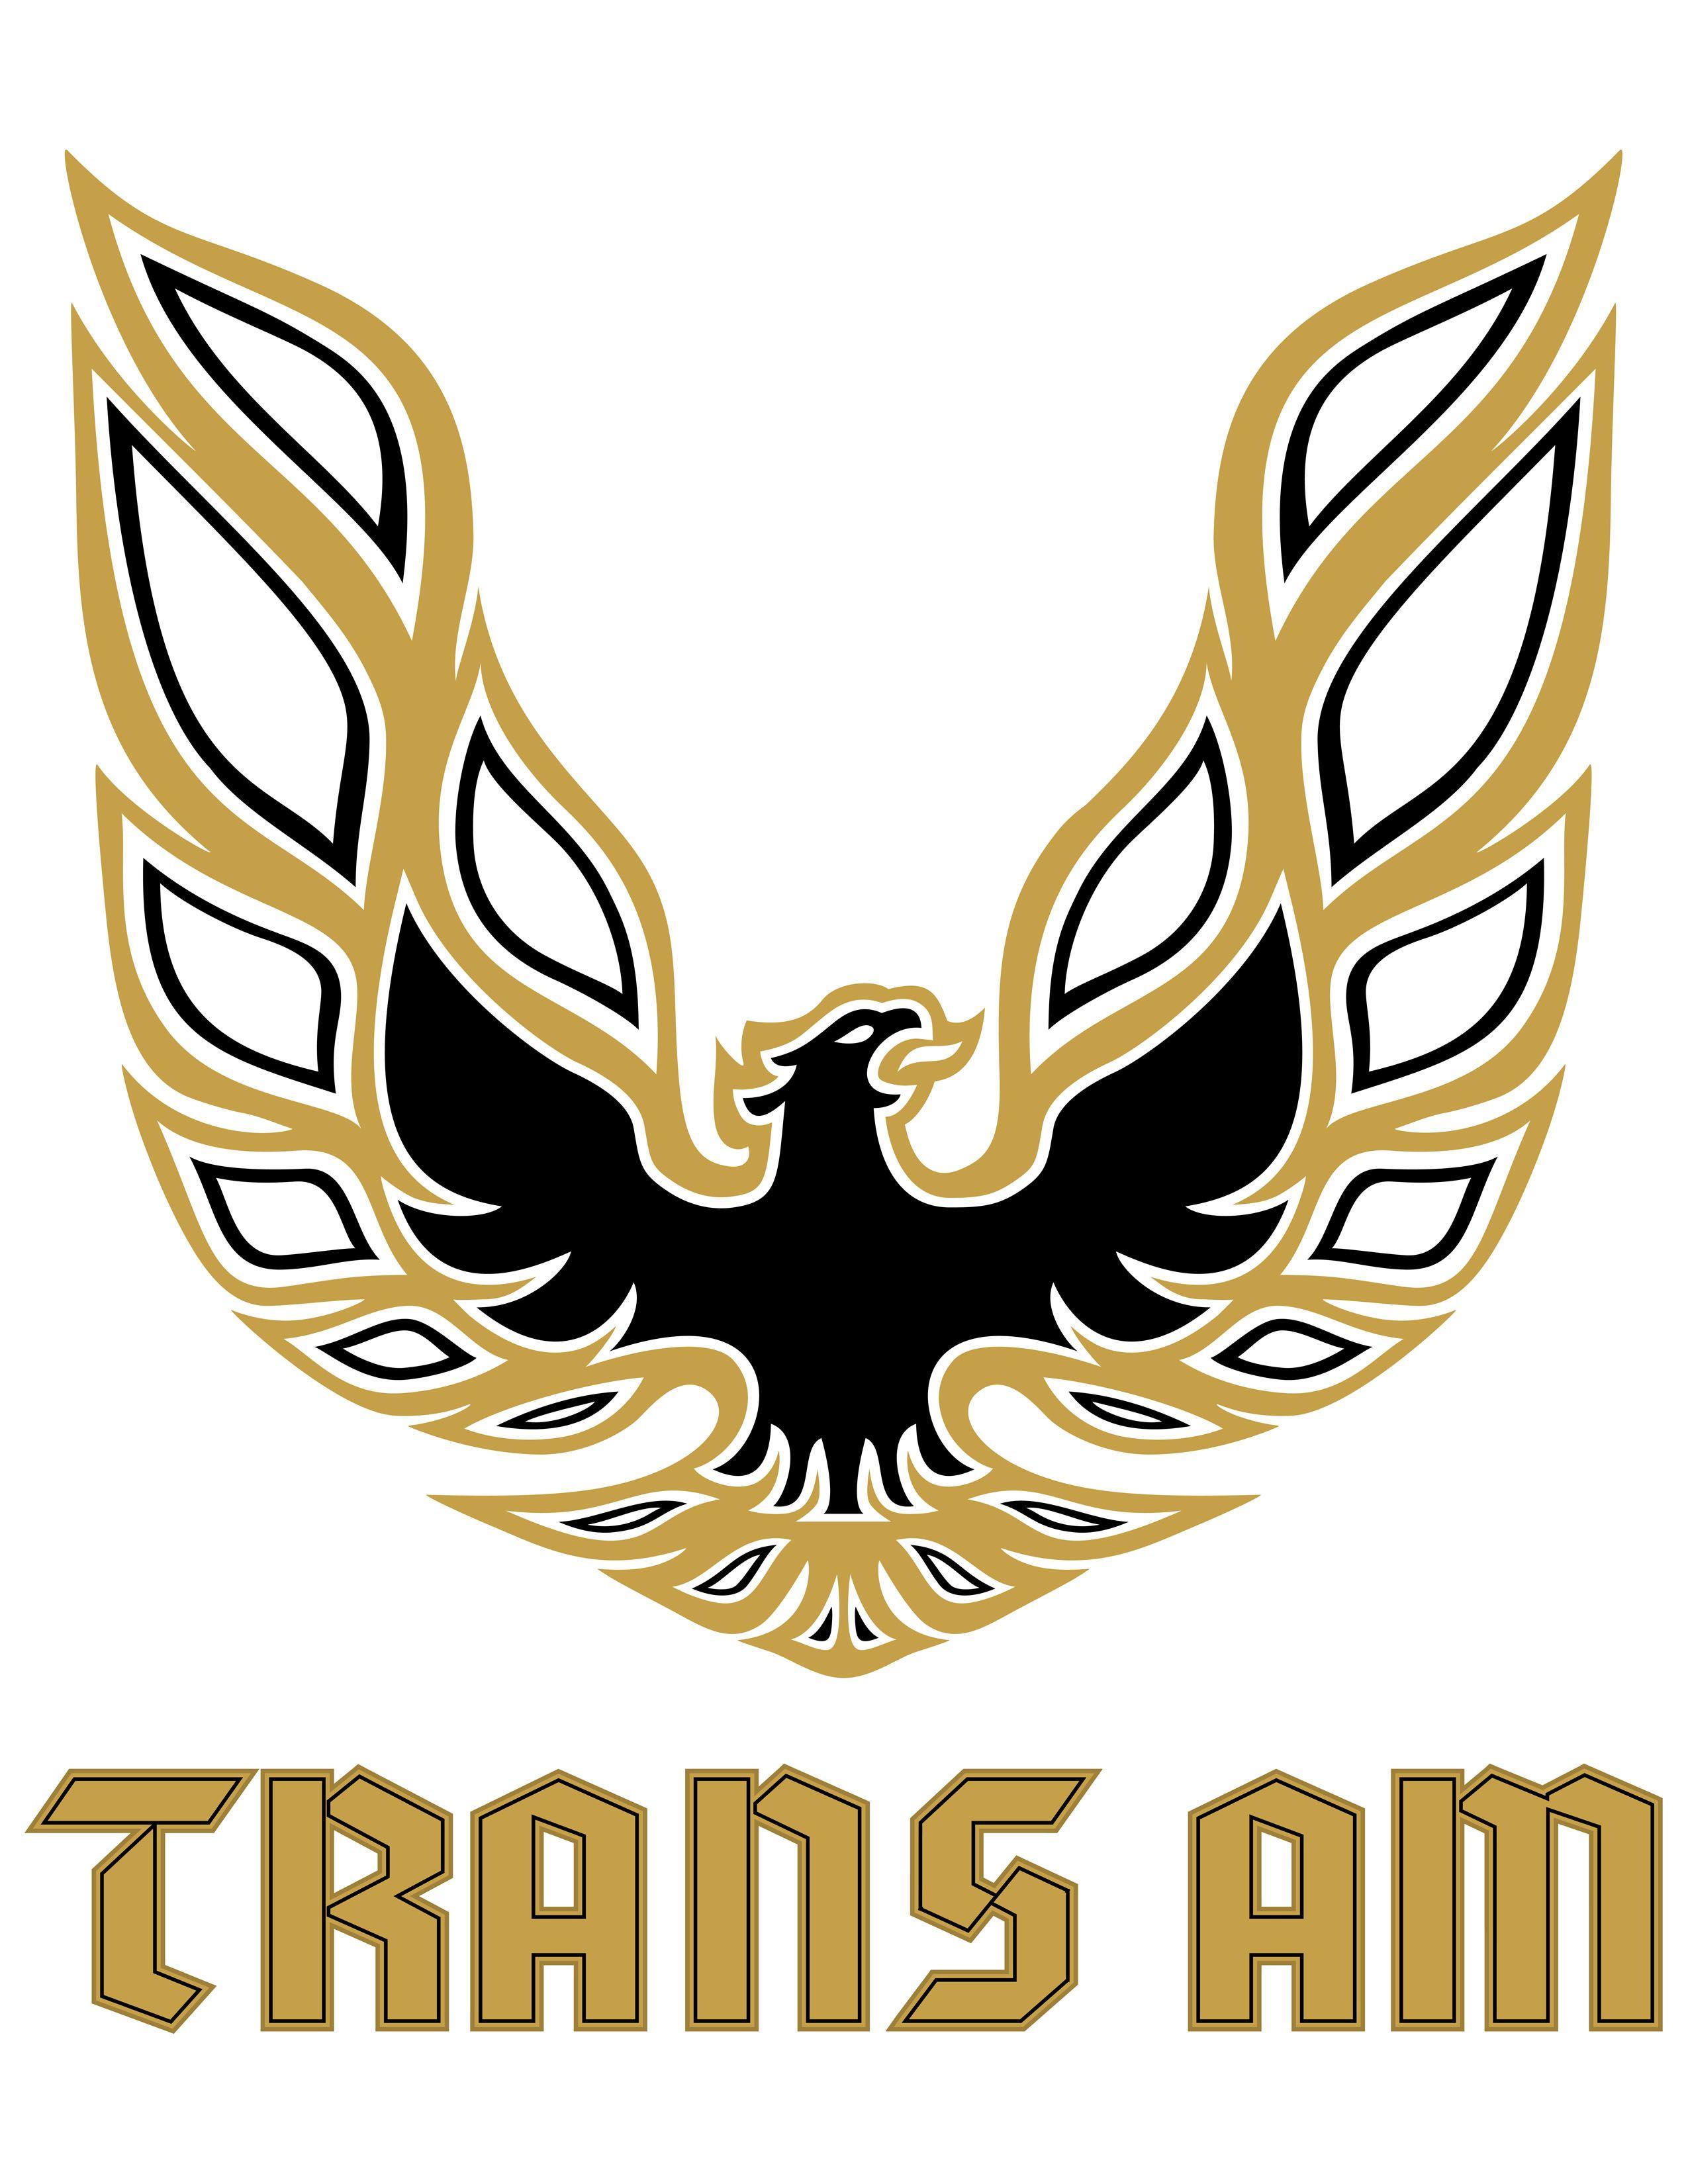 Pontiac Firebird Logo - 1978 trans am decal | ... 1978 Trans Am. The text logo is the front ...